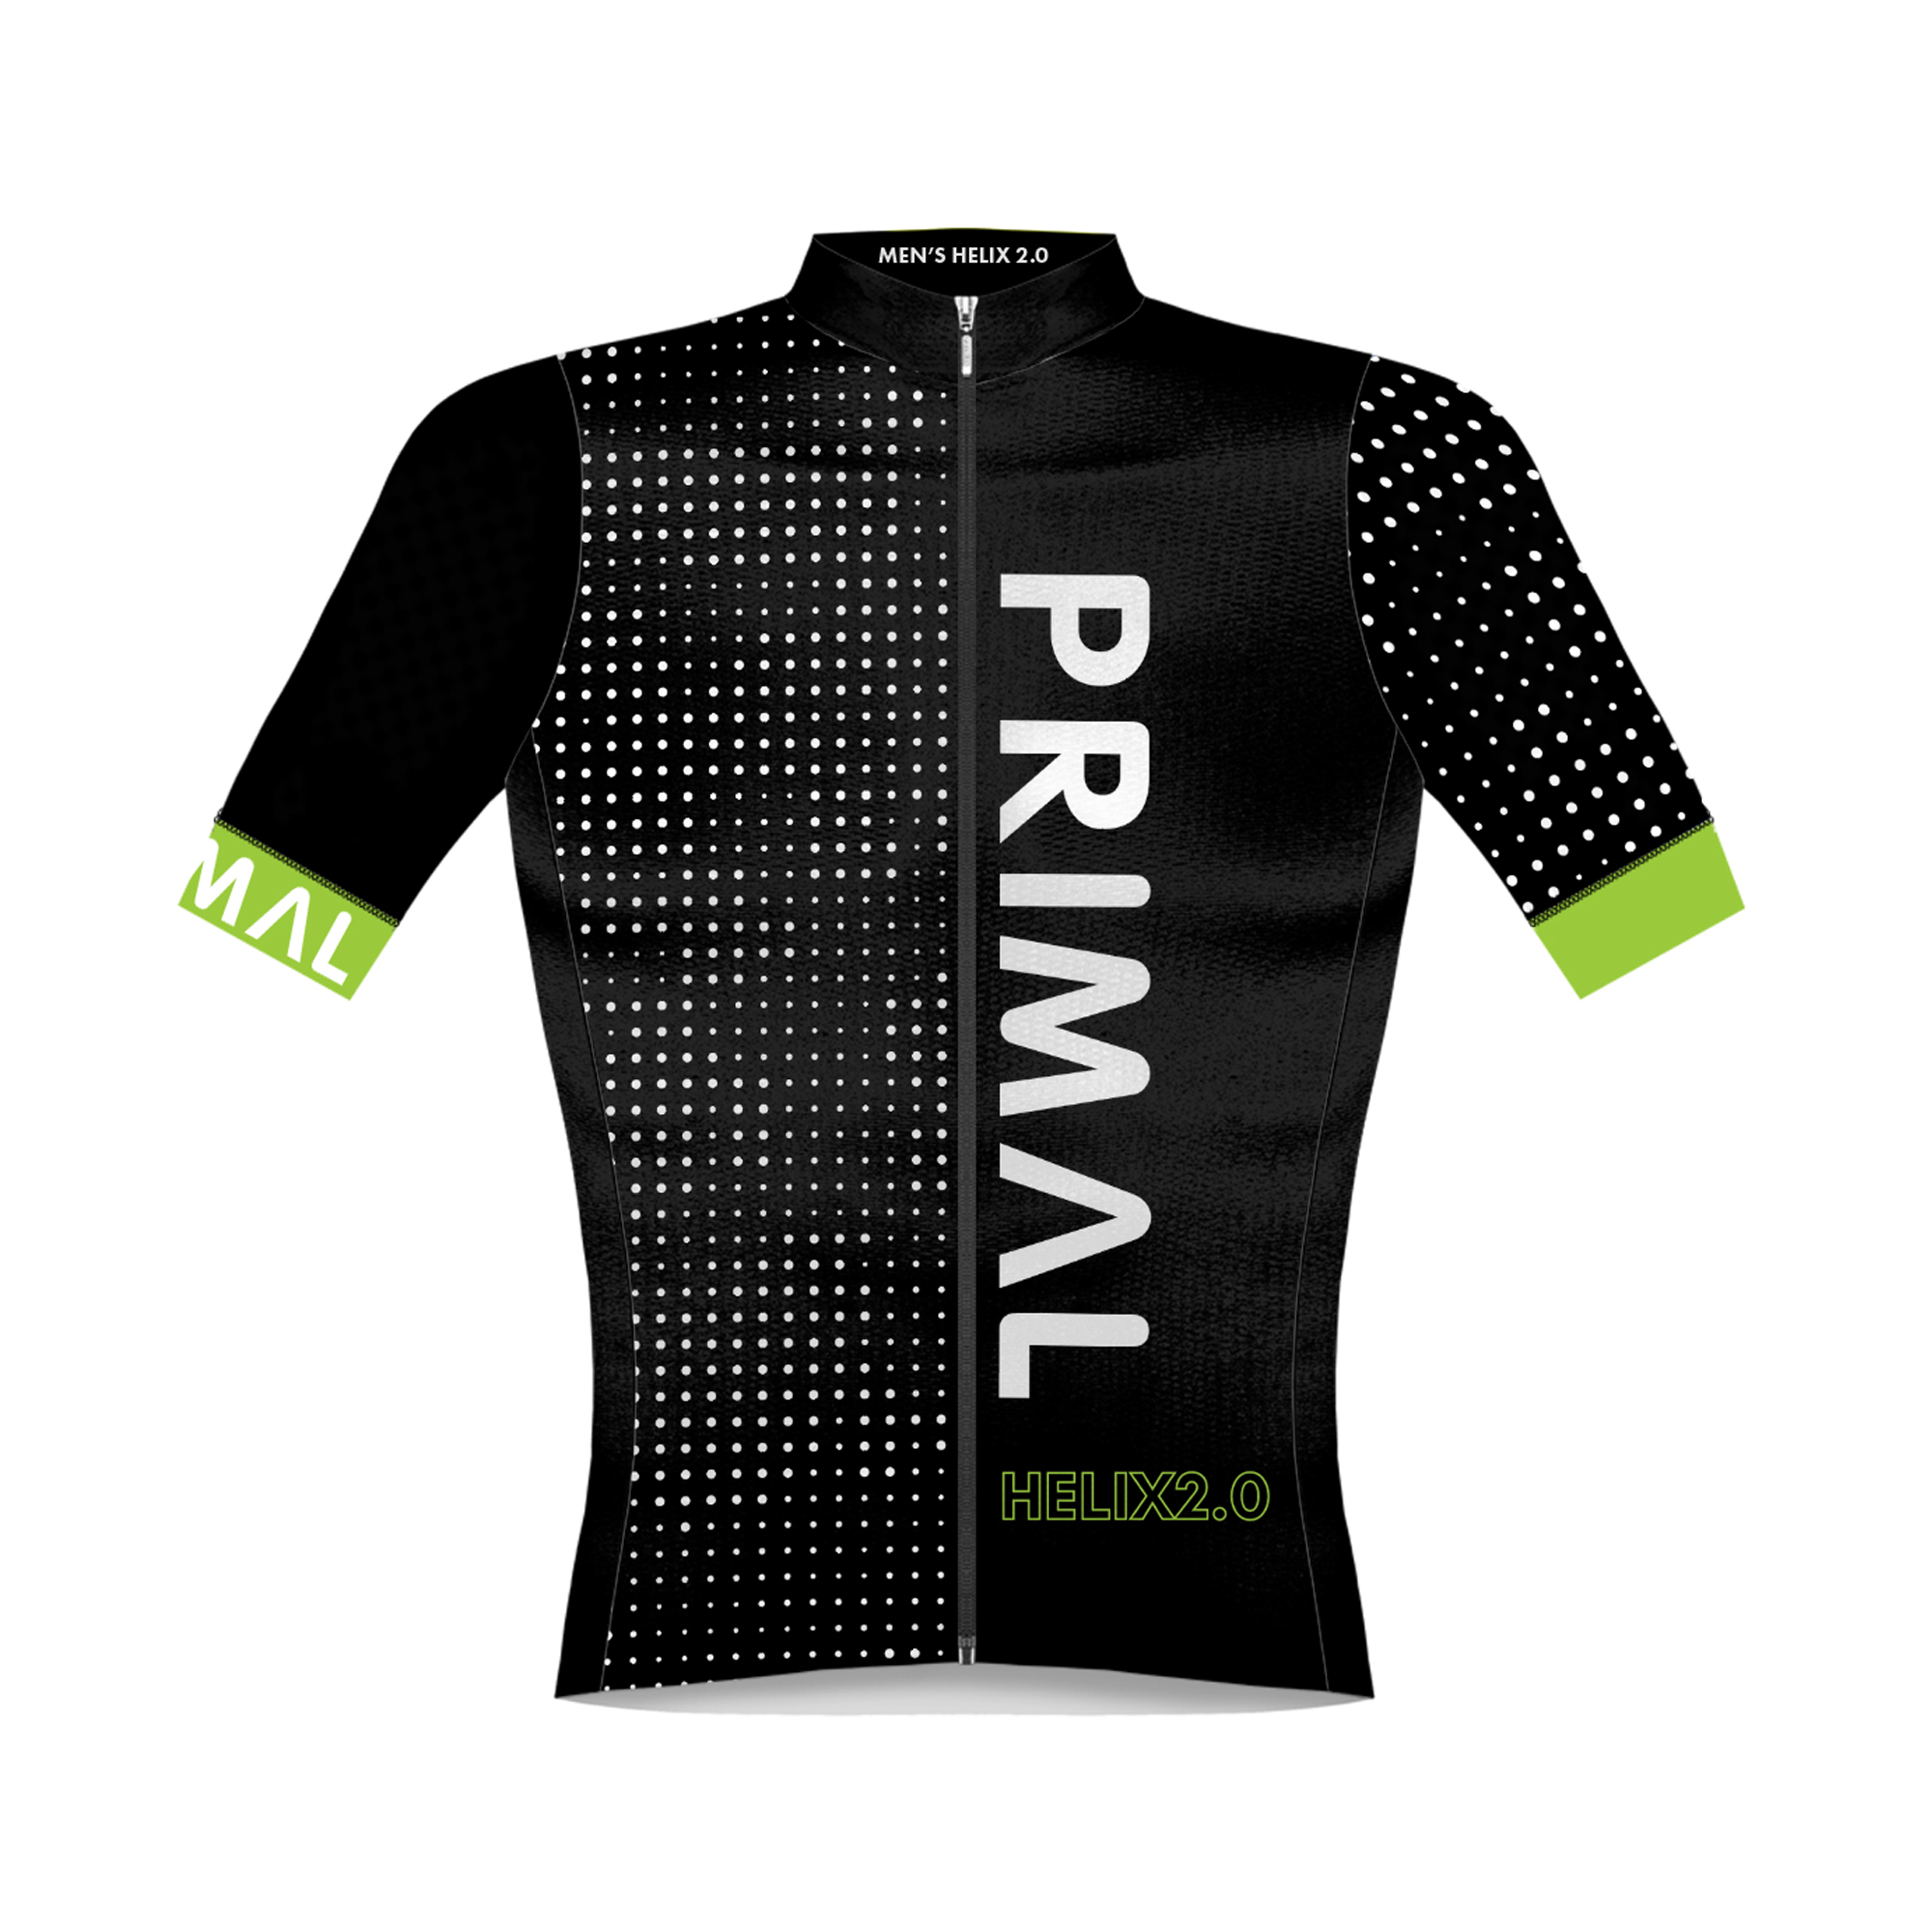 Primal Wear Cycling Jersey Houston Astros Home/Away Men's Sport Cut Jersey  by Primal